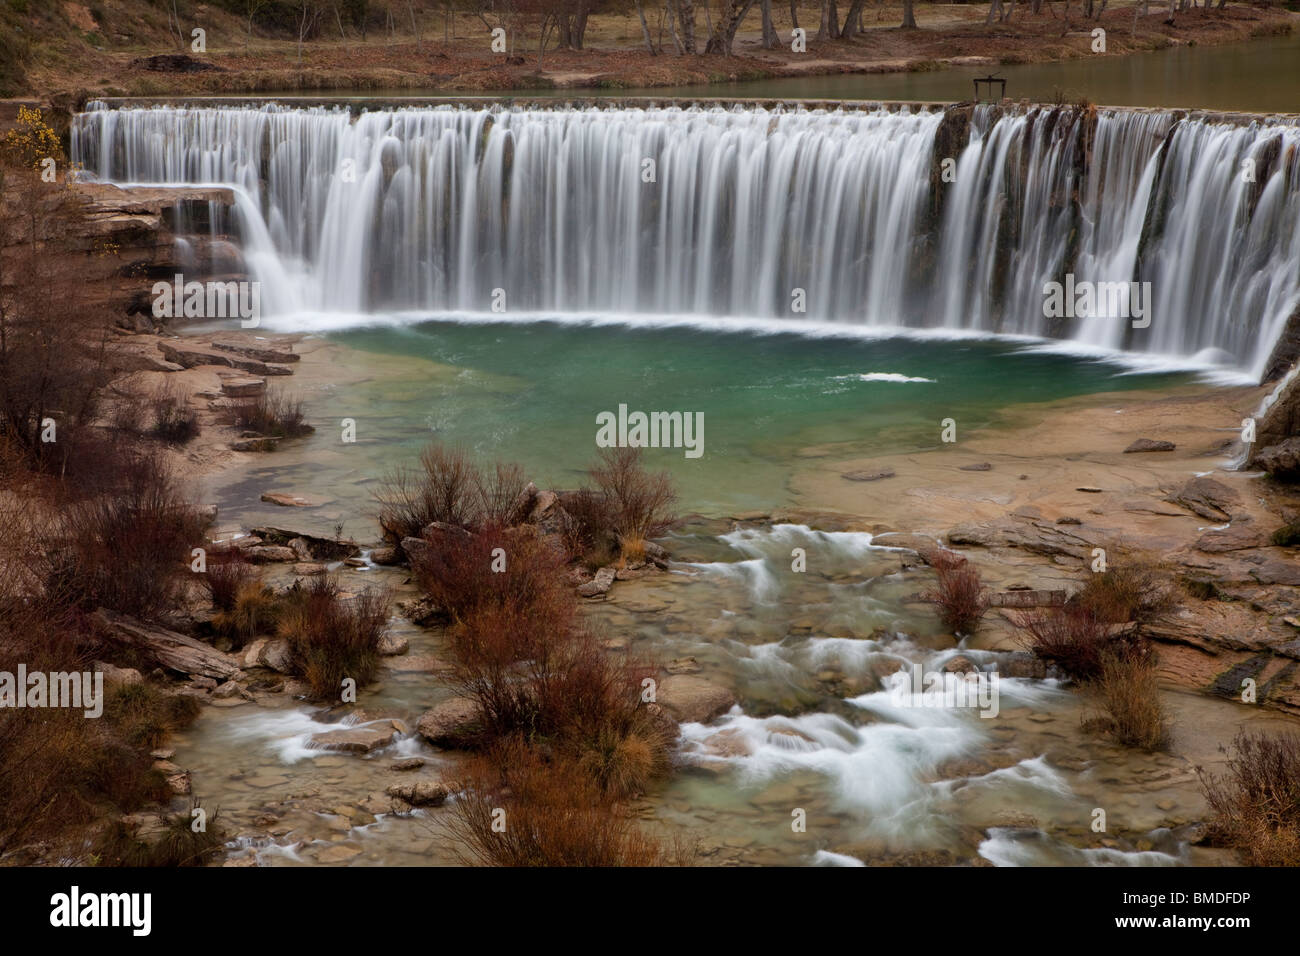 Bierge waterfall (Salto del Bierge), Natural Park of Sierra de Guara, Huesca, Spain Stock Photo